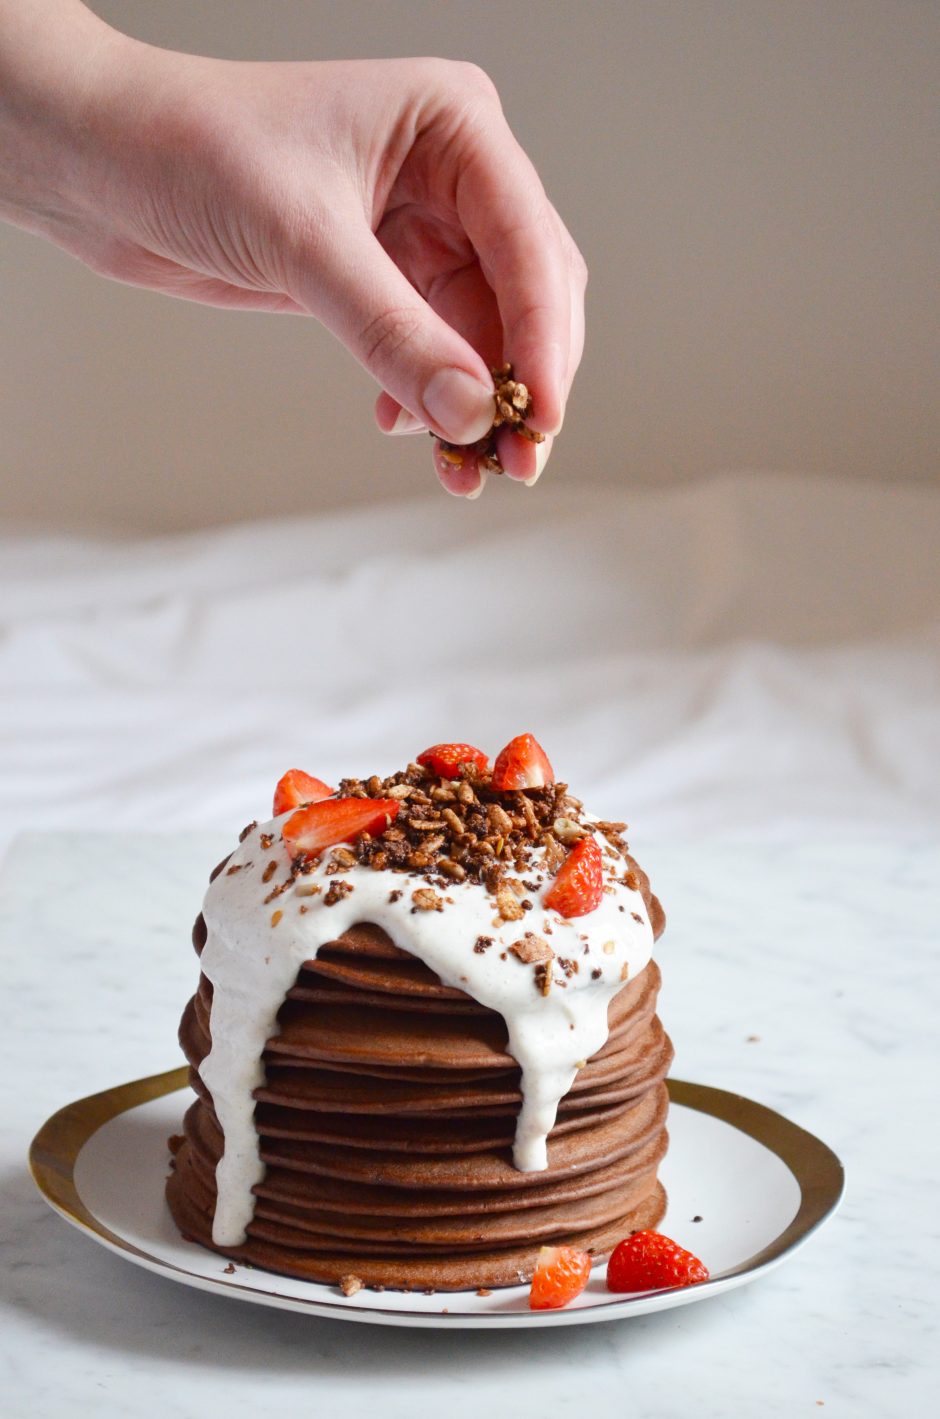 Chocolate pancakes topped with a greek yoghurt vanilla cream, fresh strawberries and chocolate granola